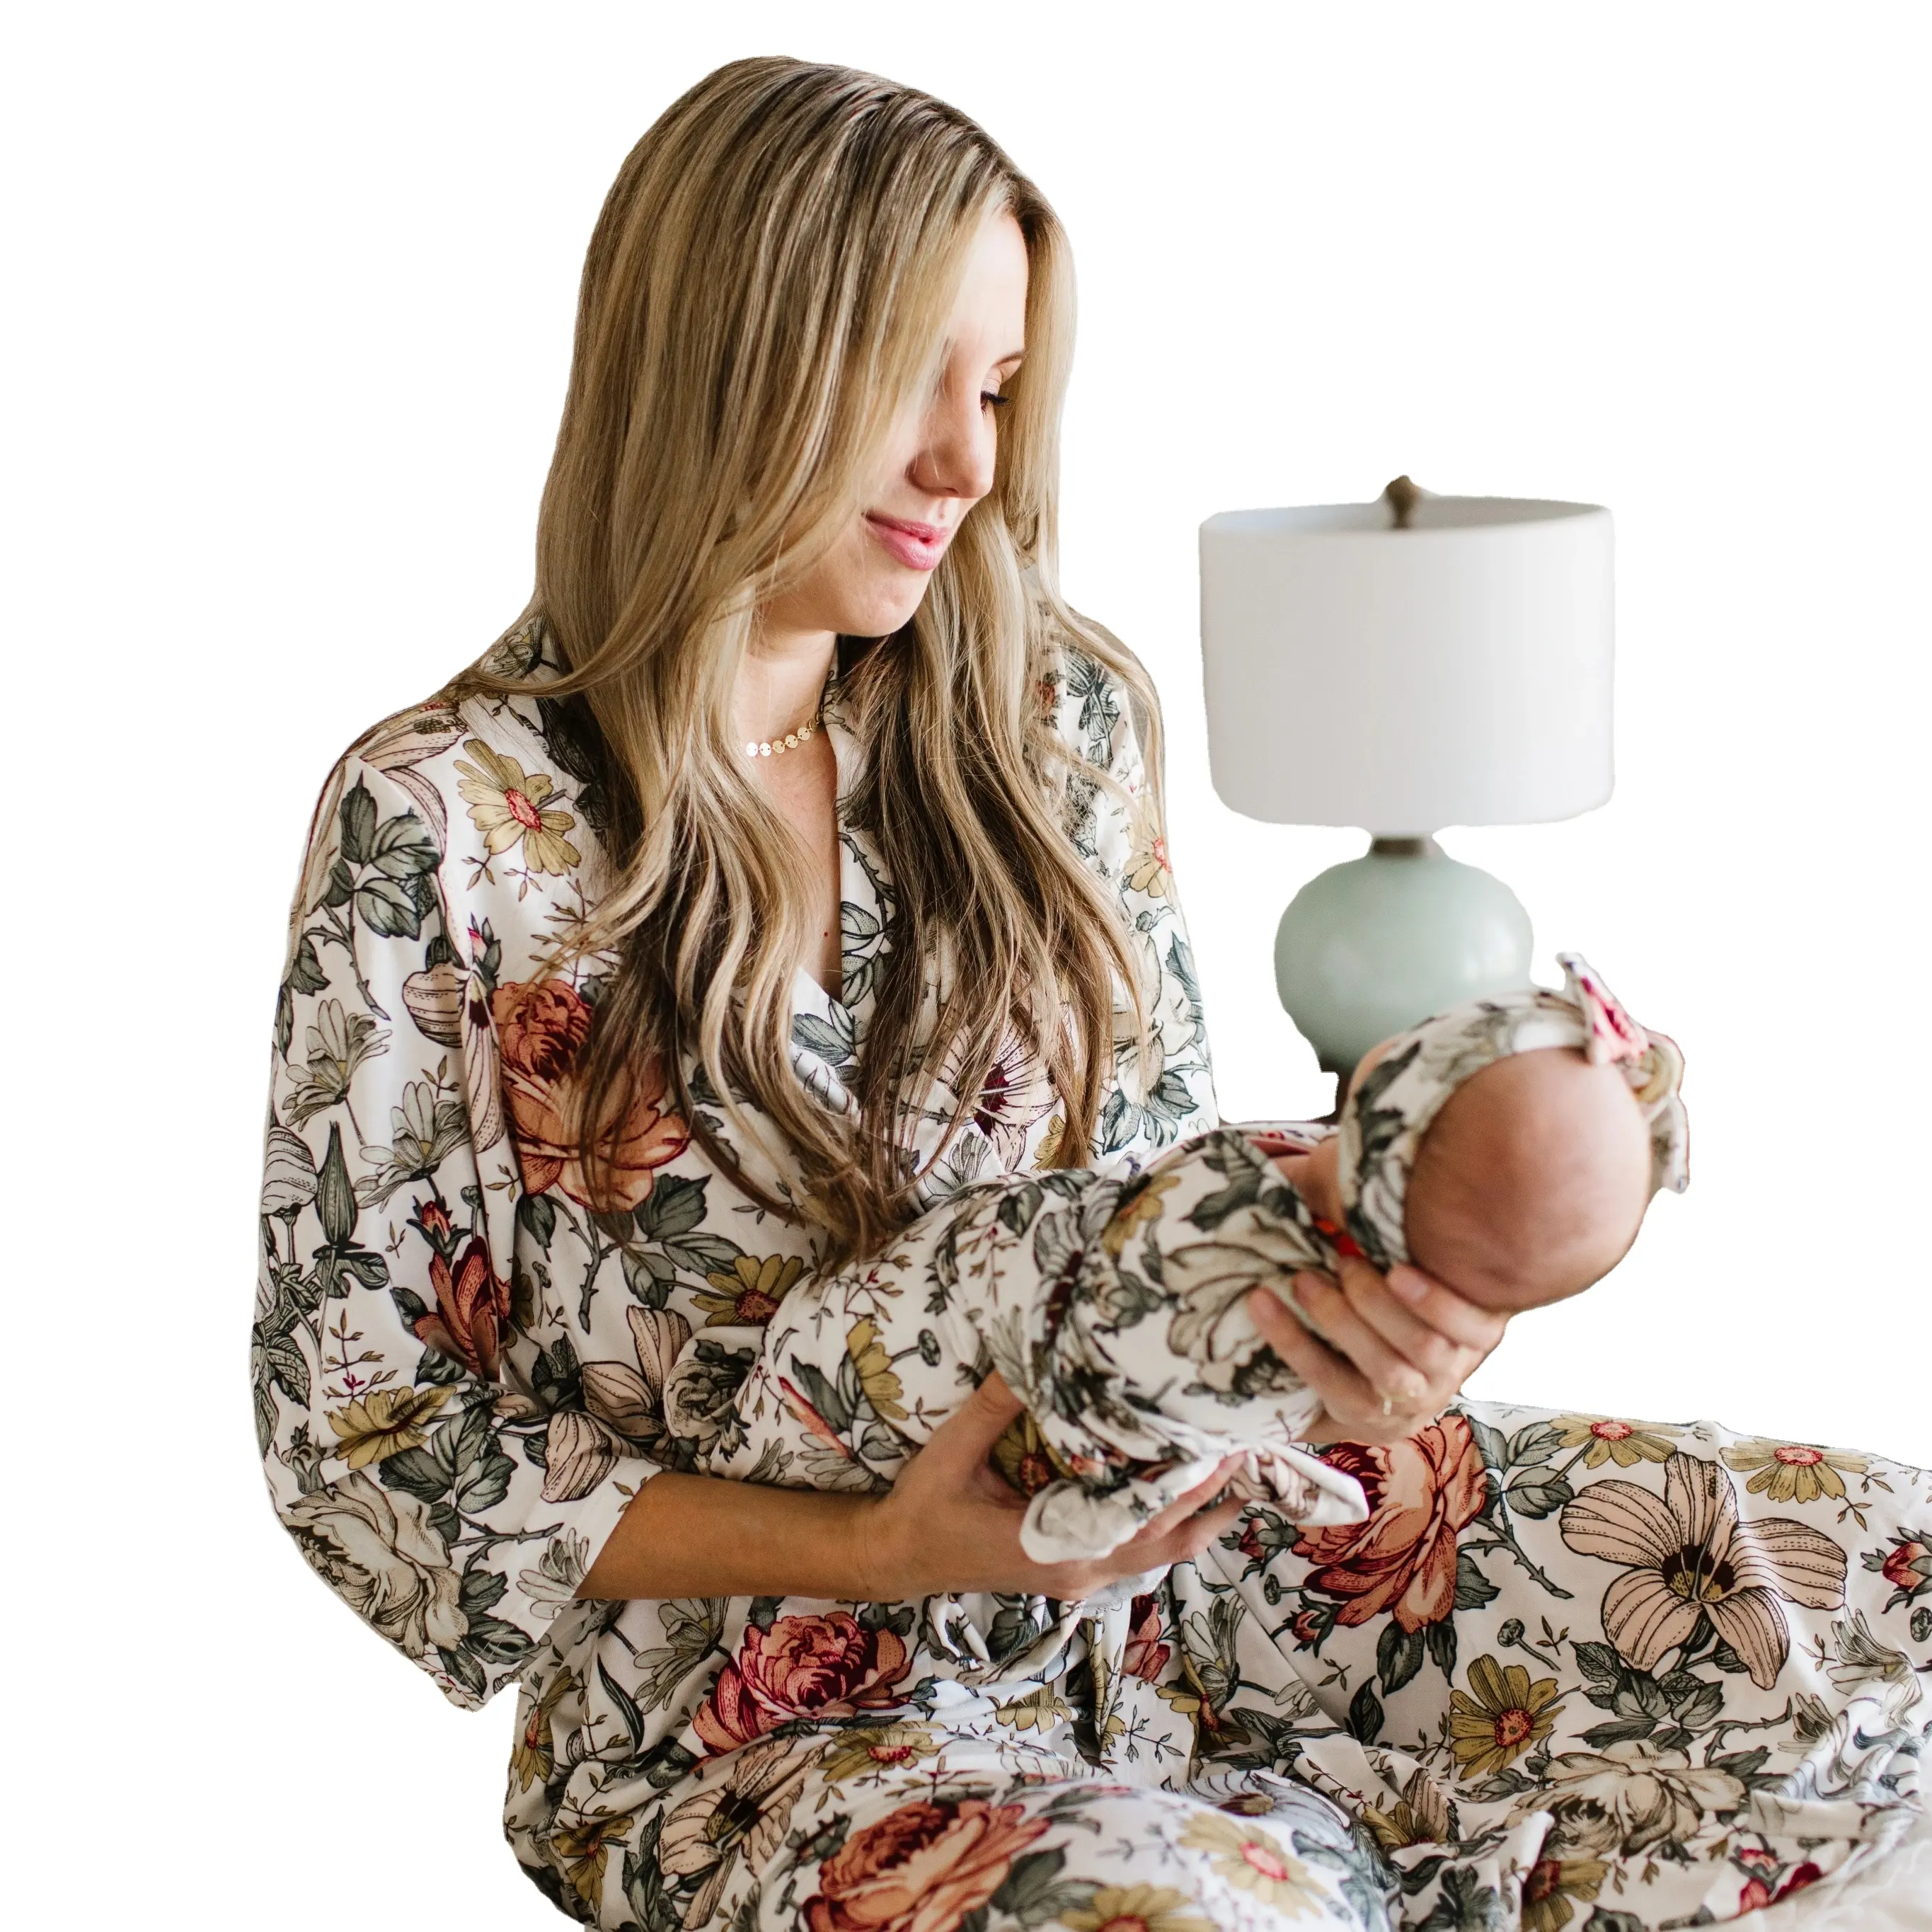 New Arrival Polyester Rayon knit pregnancy clothes Women Sleepwear Bath Hattie Maternity Robe dresses photoshoot